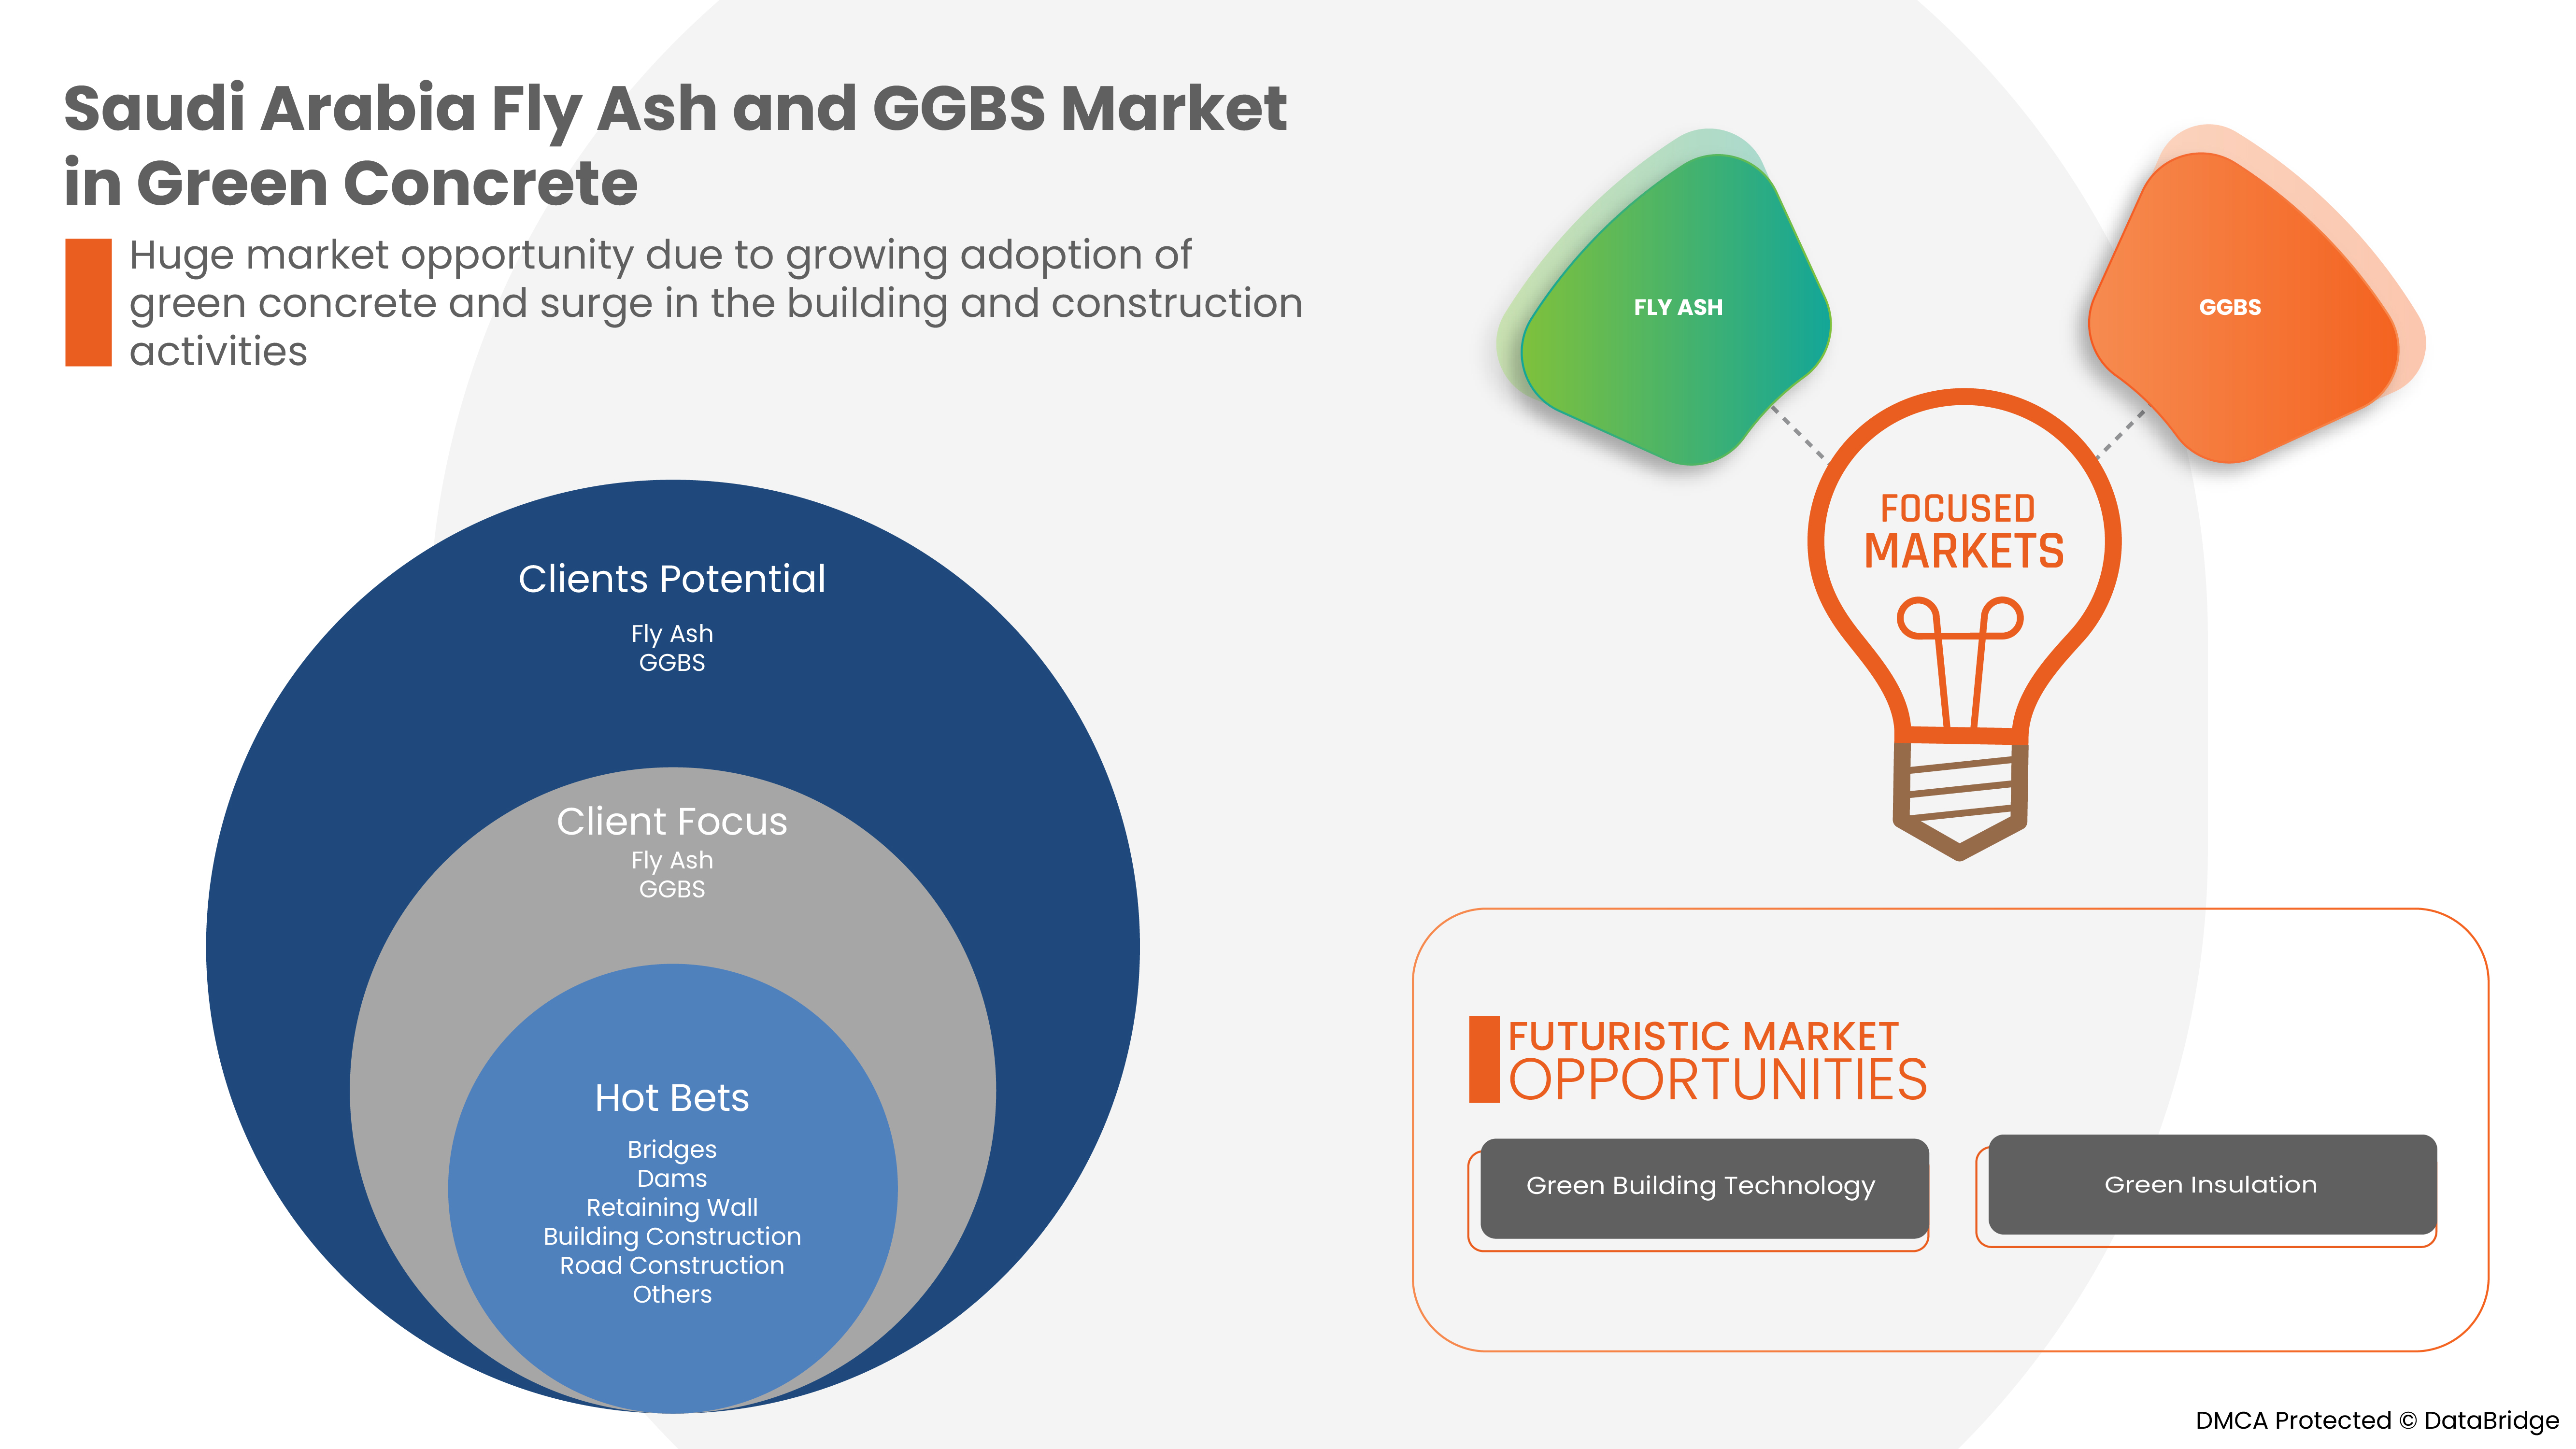 Saudi Arabia Fly ash and GGBS Market in Green Concrete